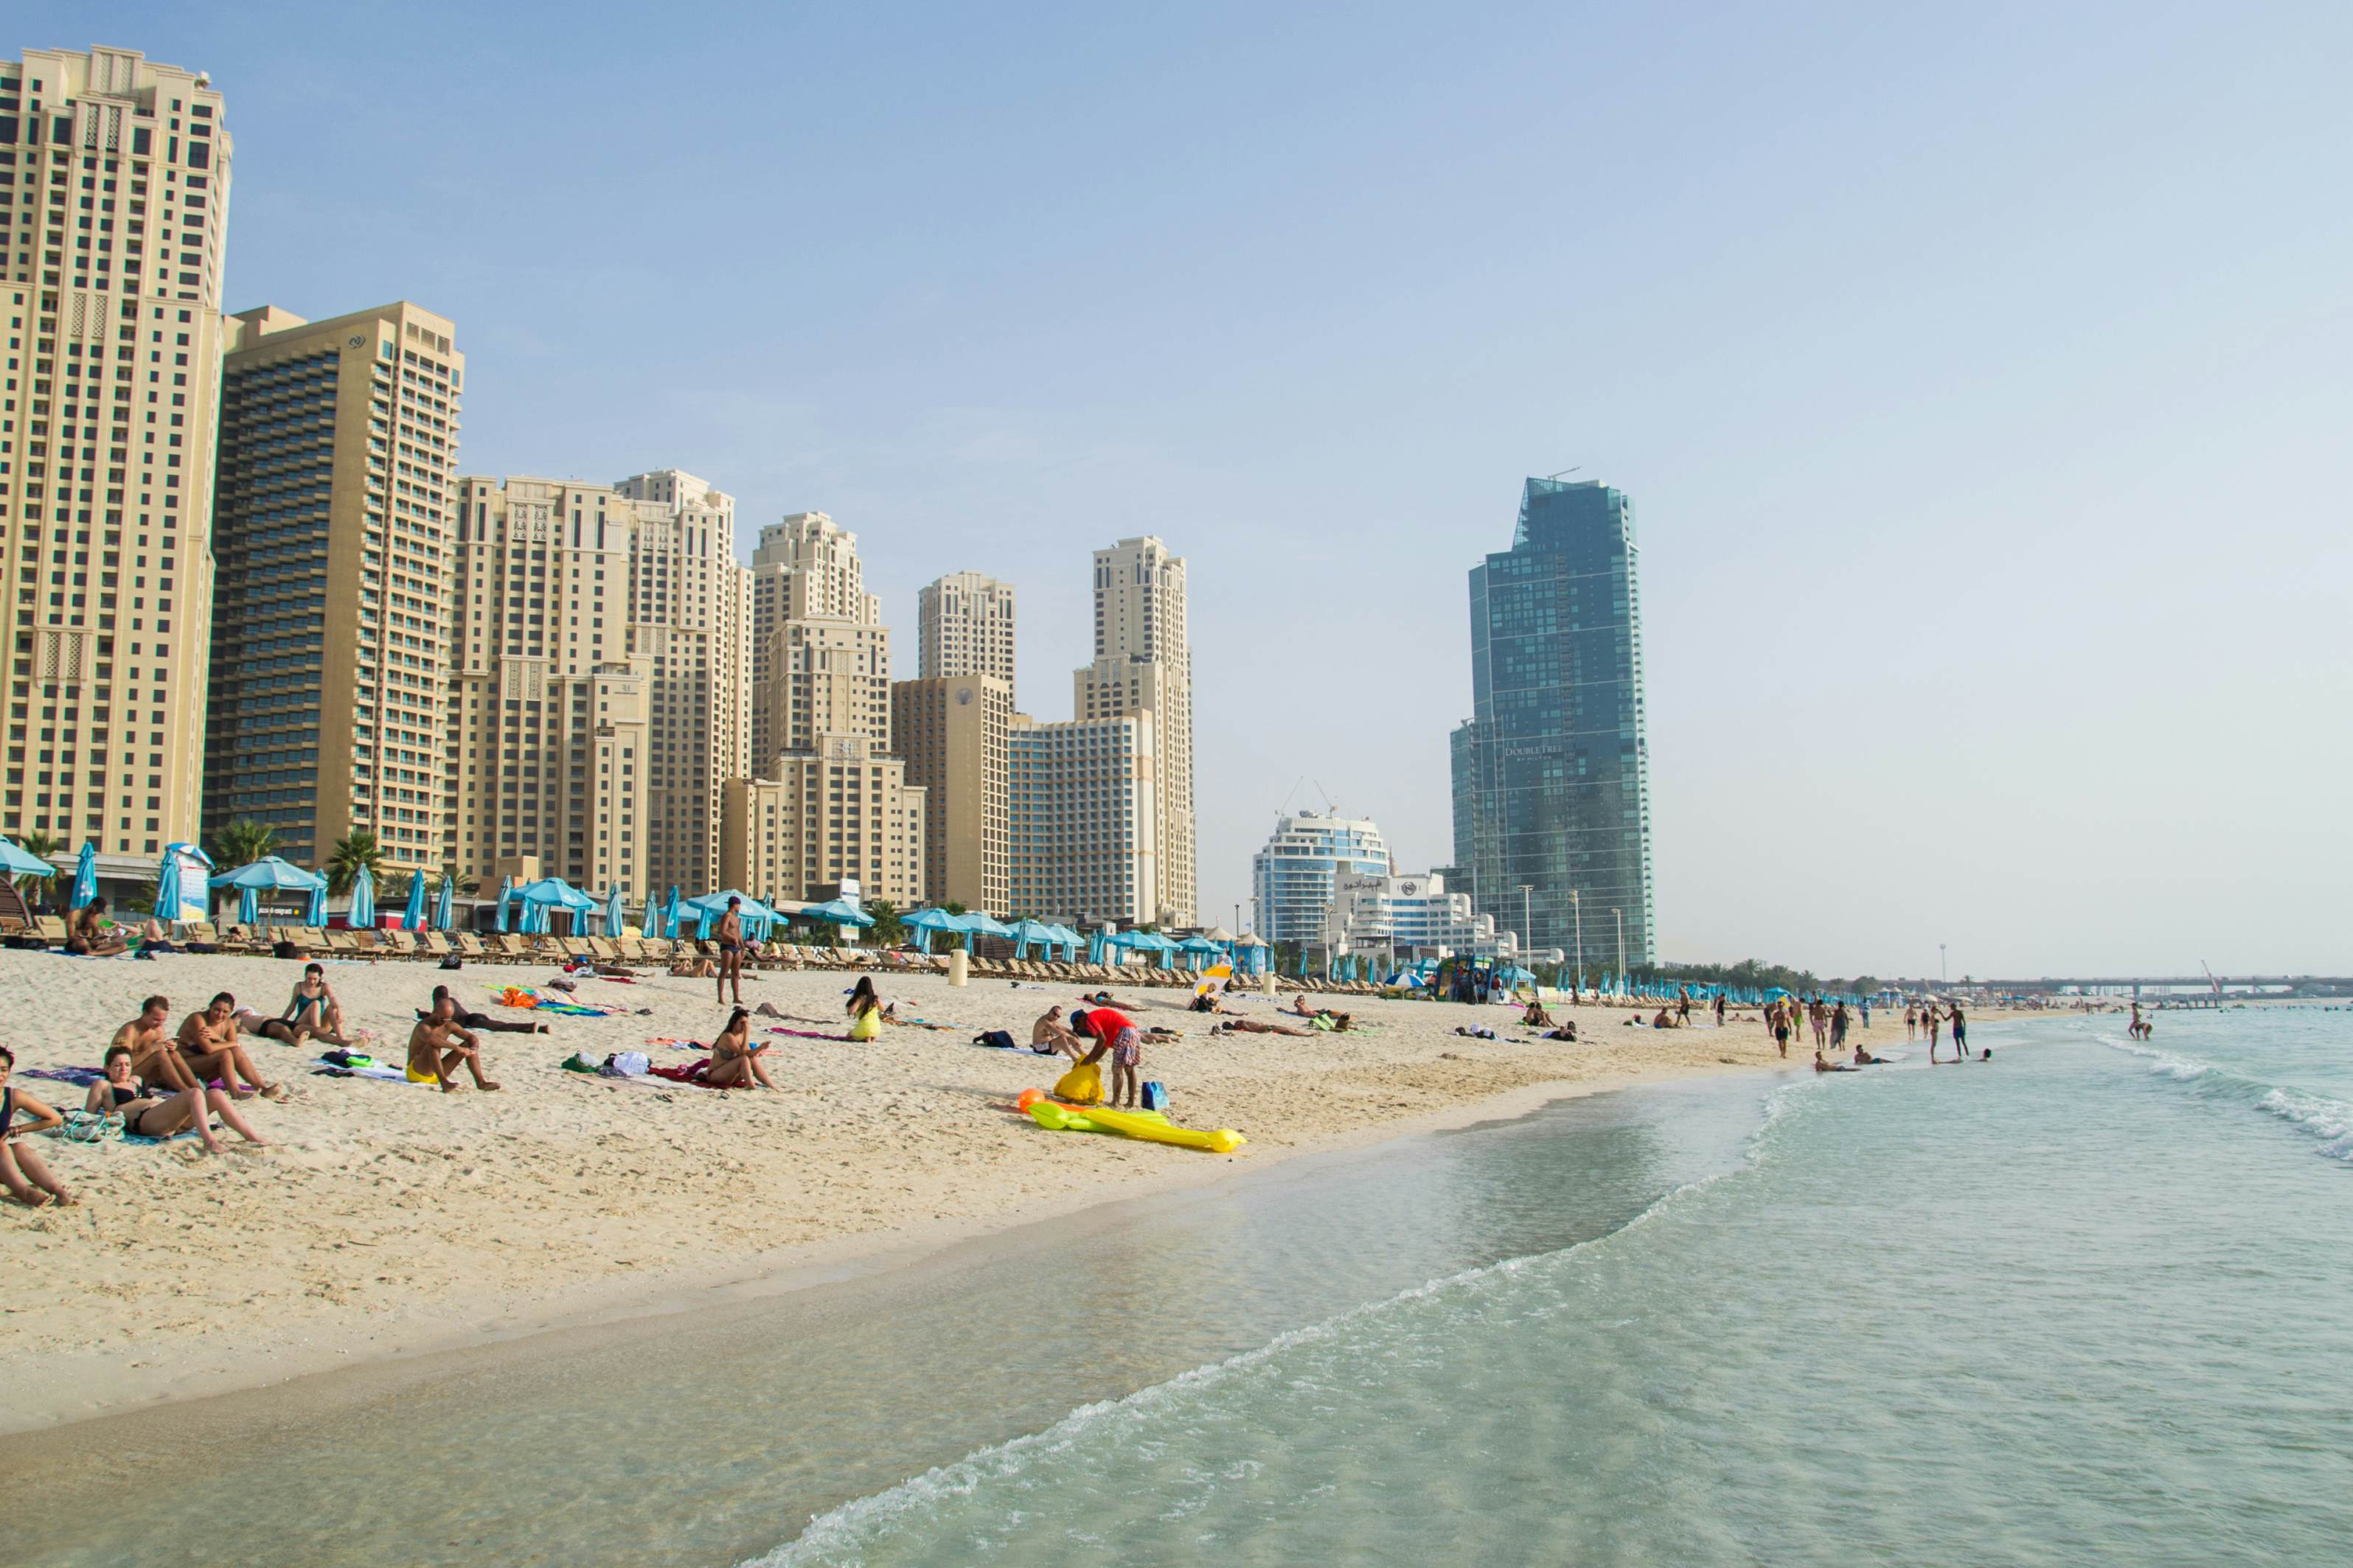 JBR Beach | Dubai, United Arab Emirates Attractions - Lonely Planet